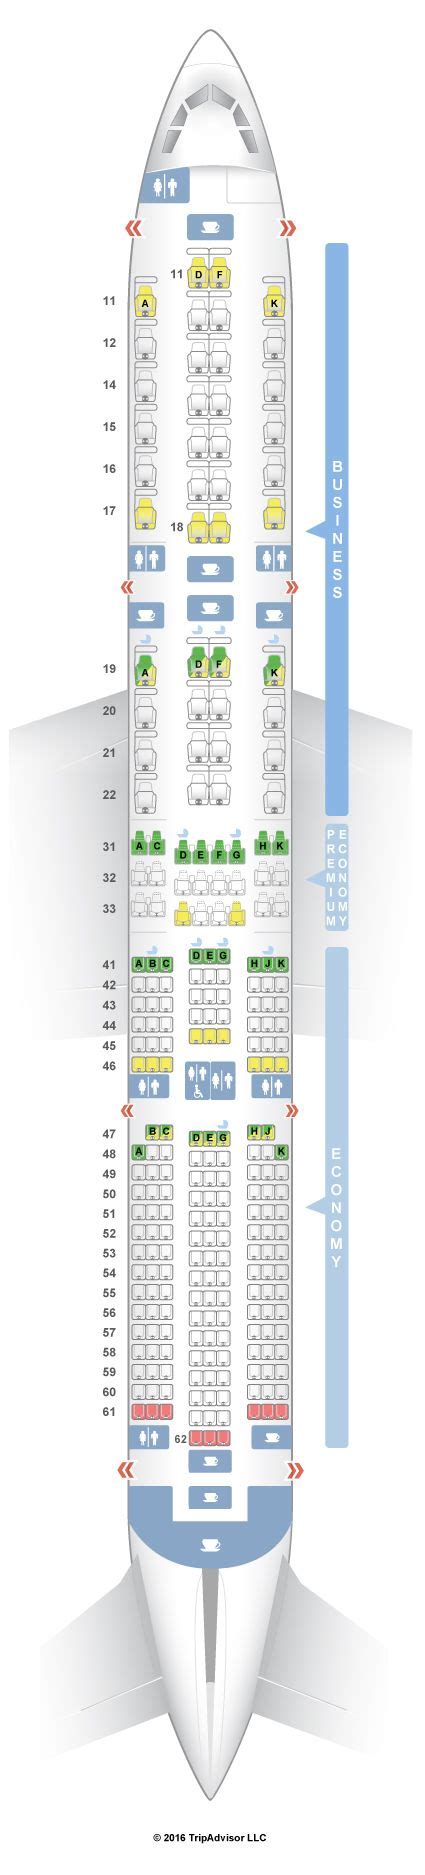 Seatguru Seat Map Singapore Airlines Airbus A350 900 359 Singapore